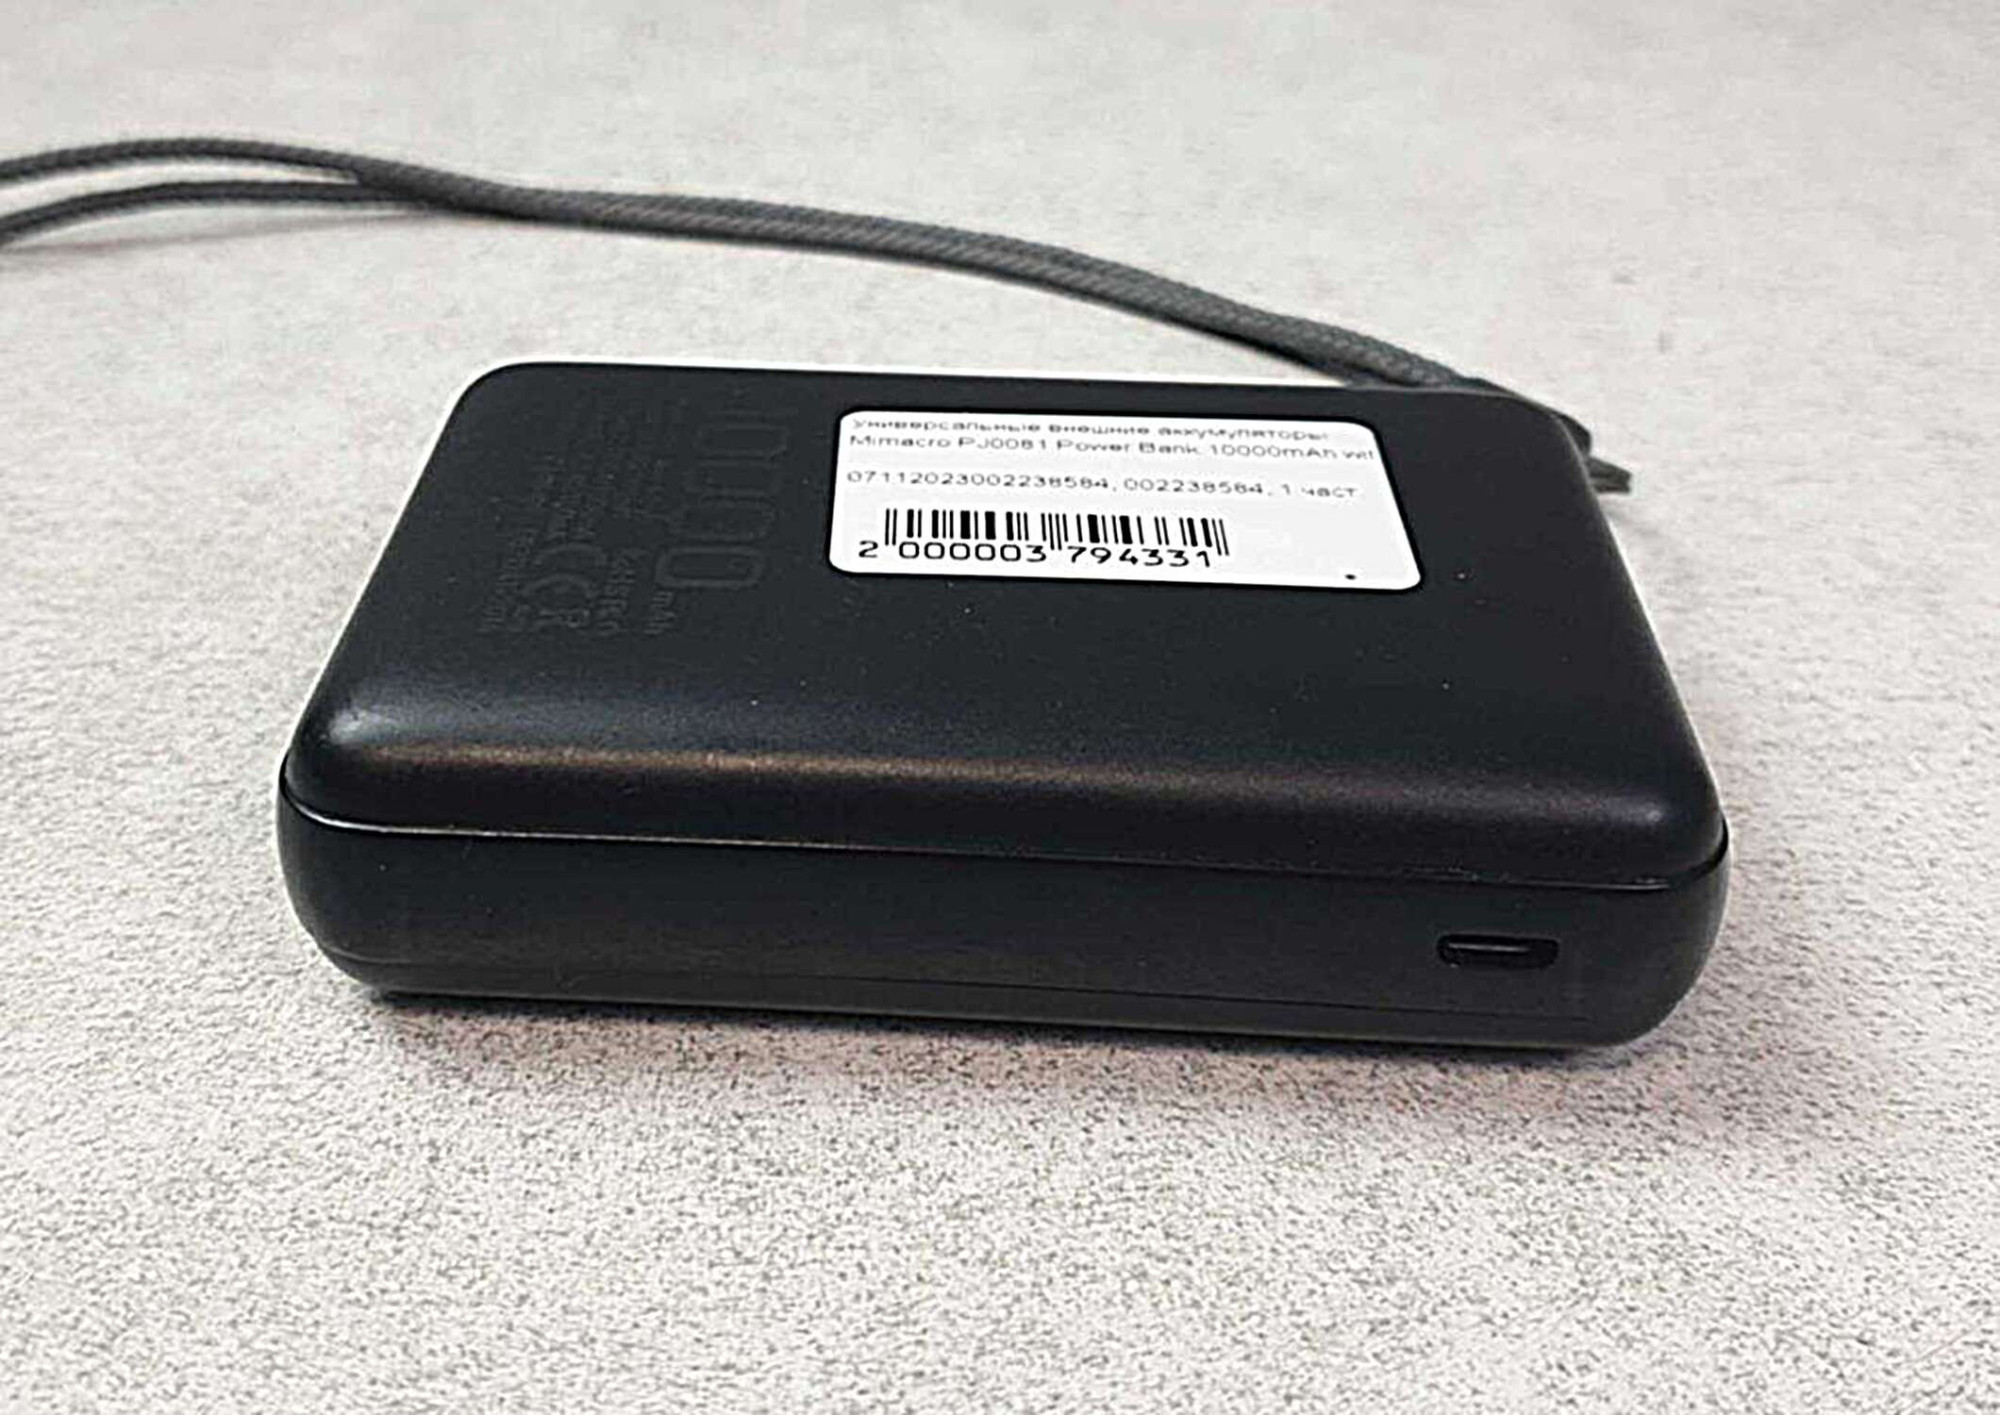 Power Bank Mimacro PJ0081 10000 mAh with 2 USB-A Ports 3